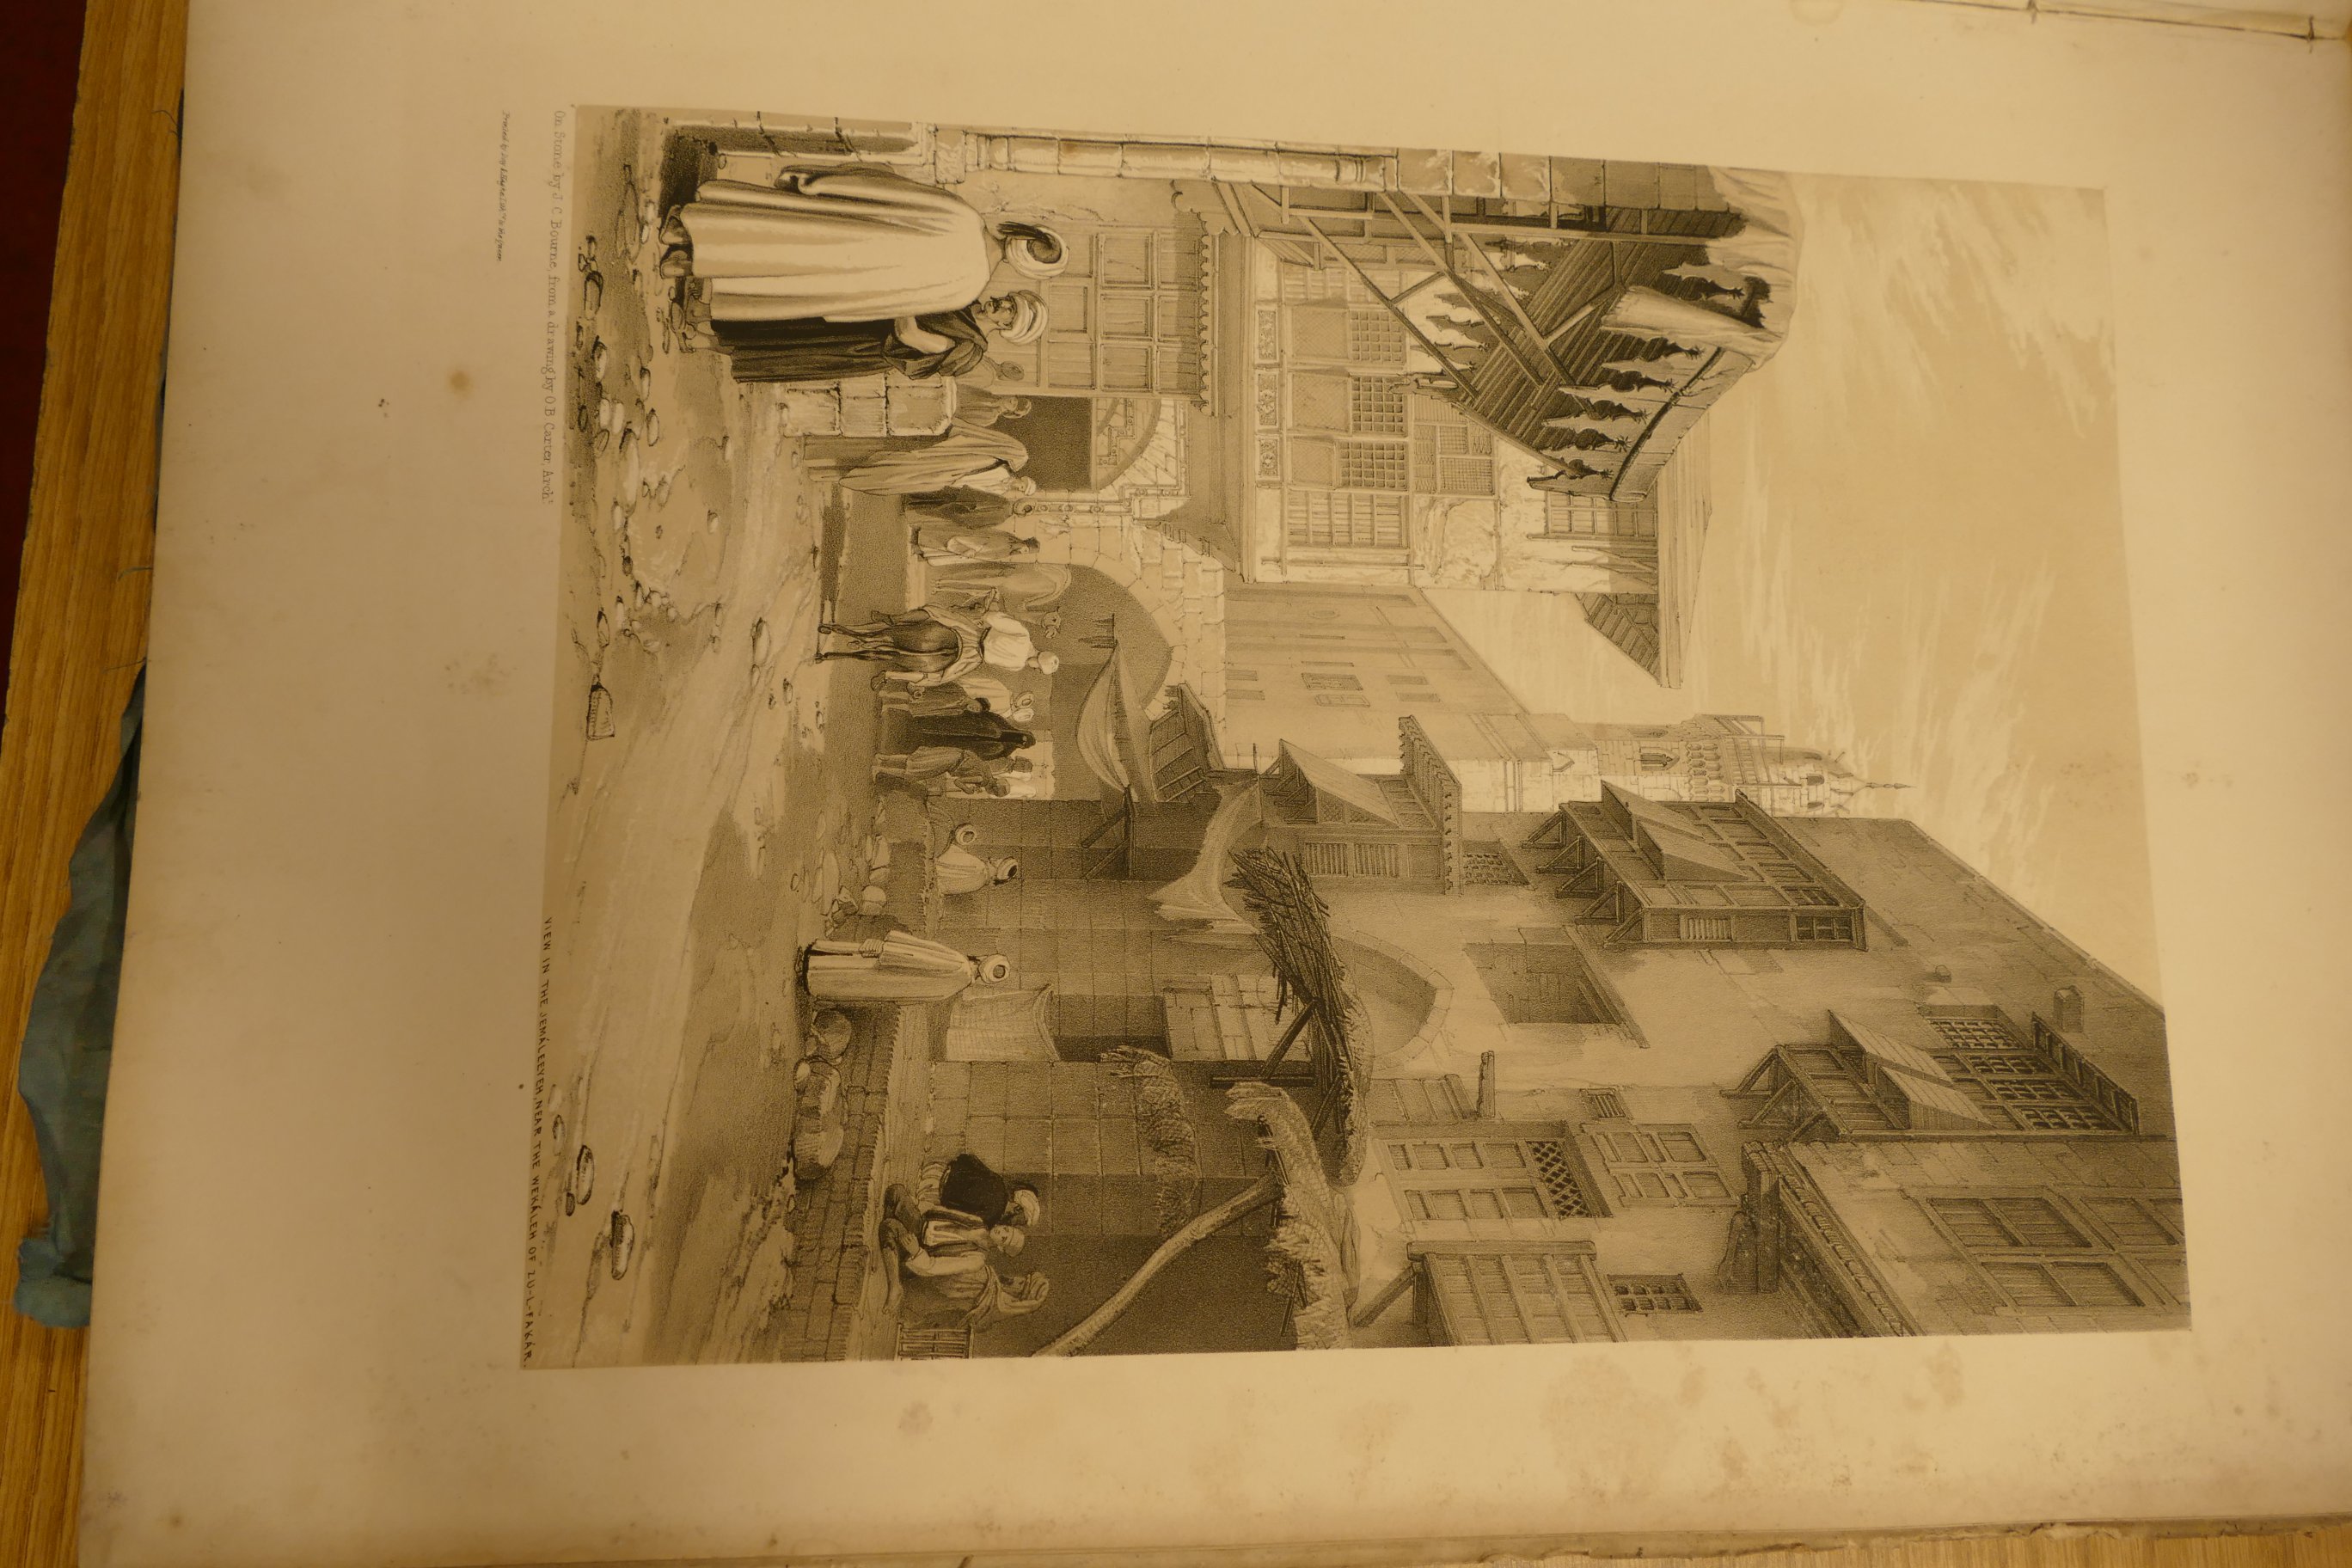 HAY, Robert, Illustrations of Cairo, London 1840, folio, very worn half calf, shaken, - Image 14 of 20